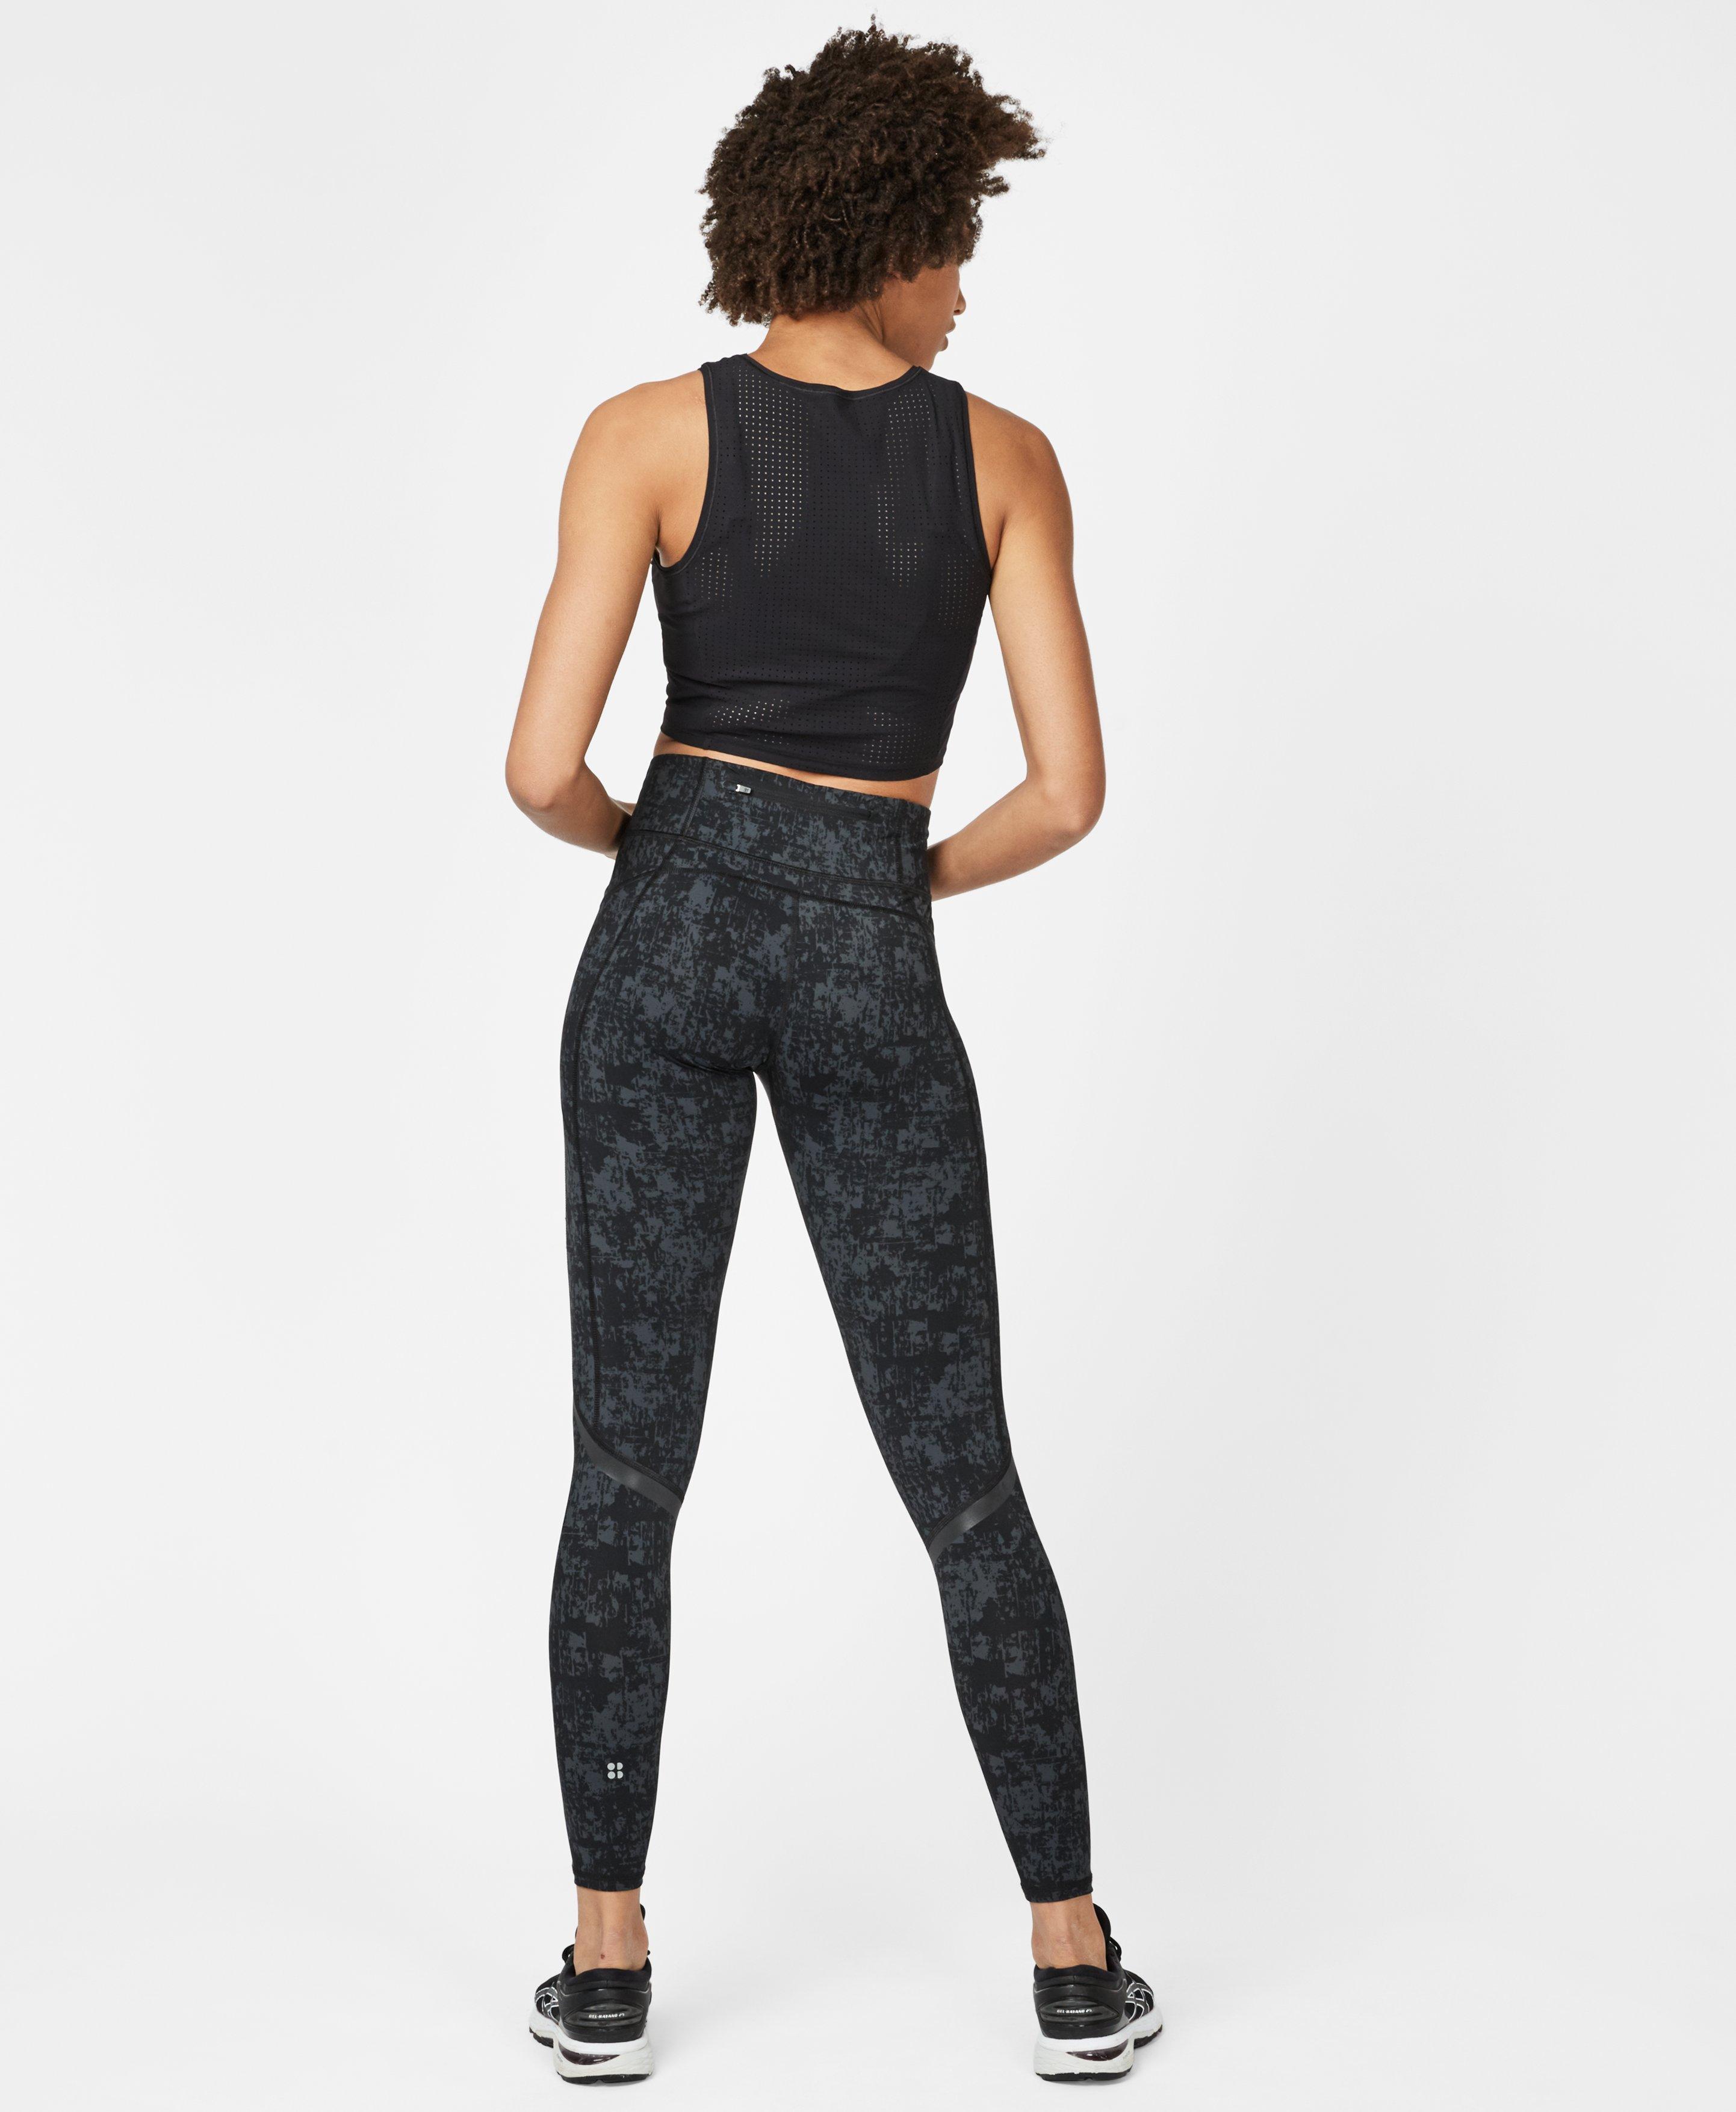 Pockets For Women - Sweaty Betty Zero Gravity High-Waisted Running Leggings,  Grey, Women's